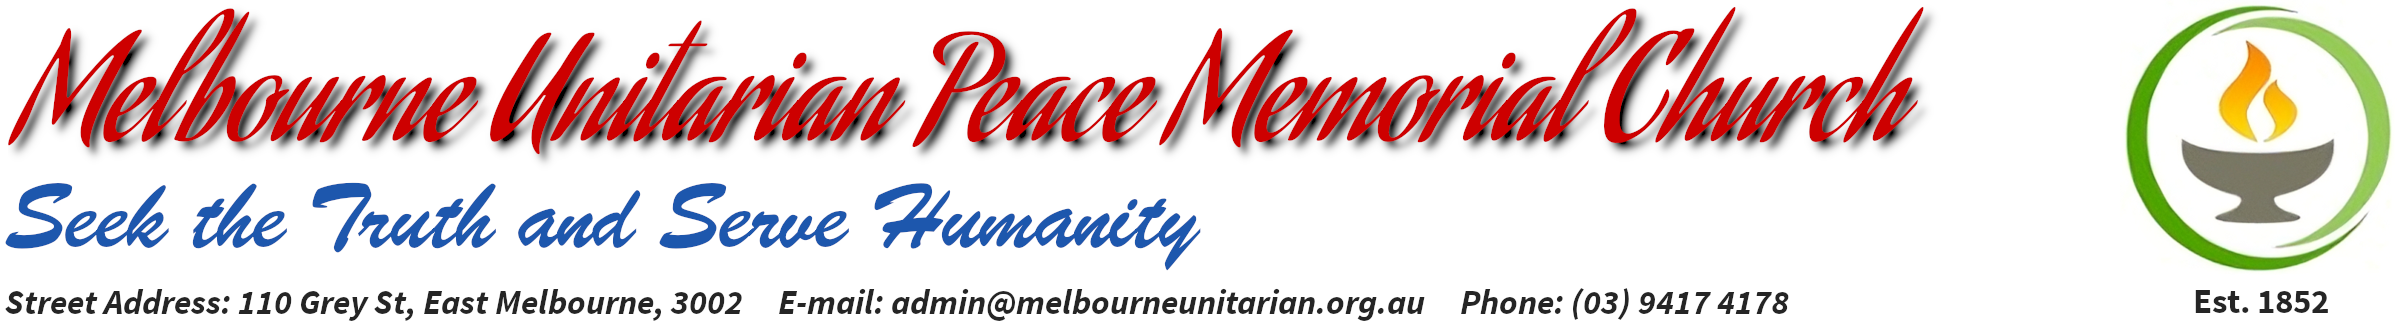 Melbourne Unitarian Peace Memorial Church Banner